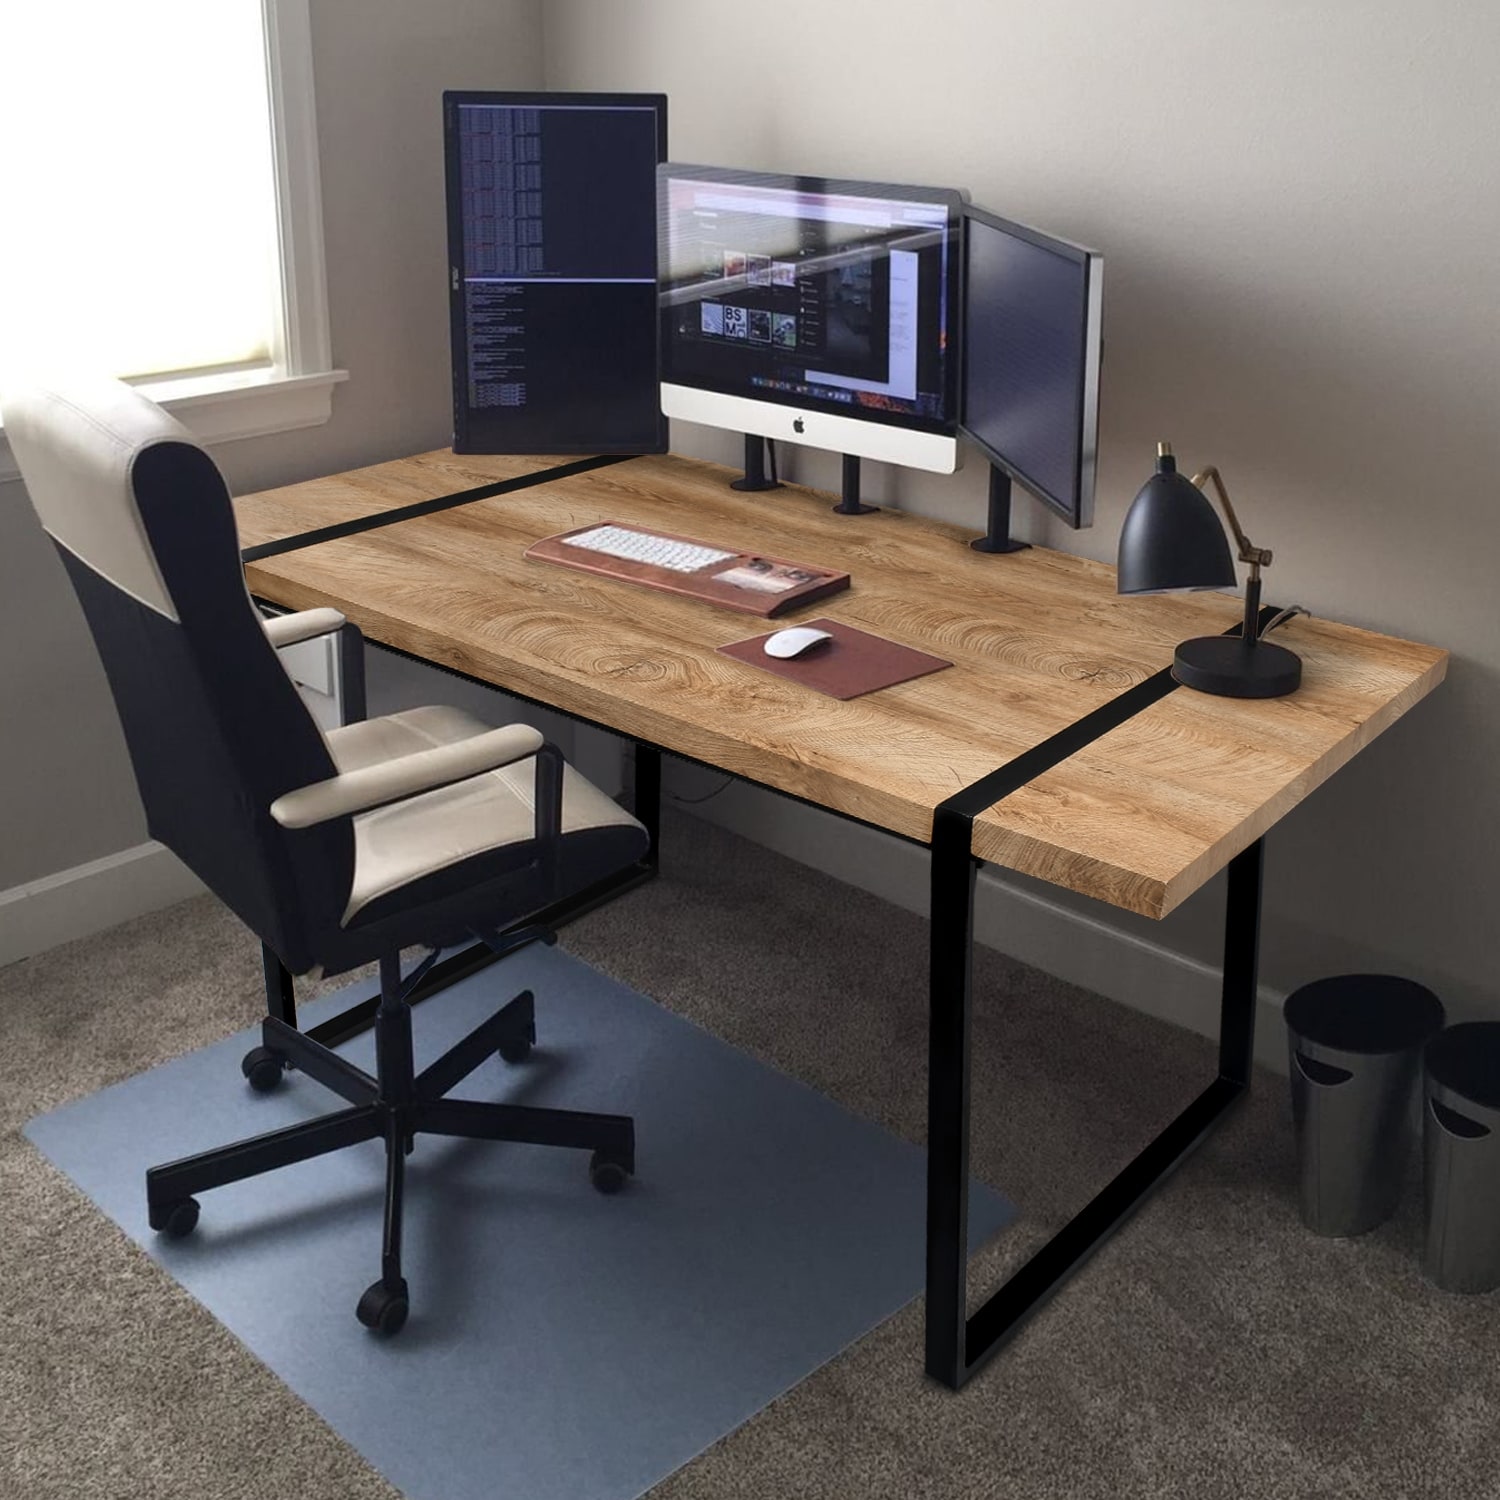 https://ak1.ostkcdn.com/images/products/is/images/direct/6d23140b005f9b04fdf8fdb8341188e36fda981f/Modern-Vintage-Rectangle-Office-Desk-Writing-Desk.jpg